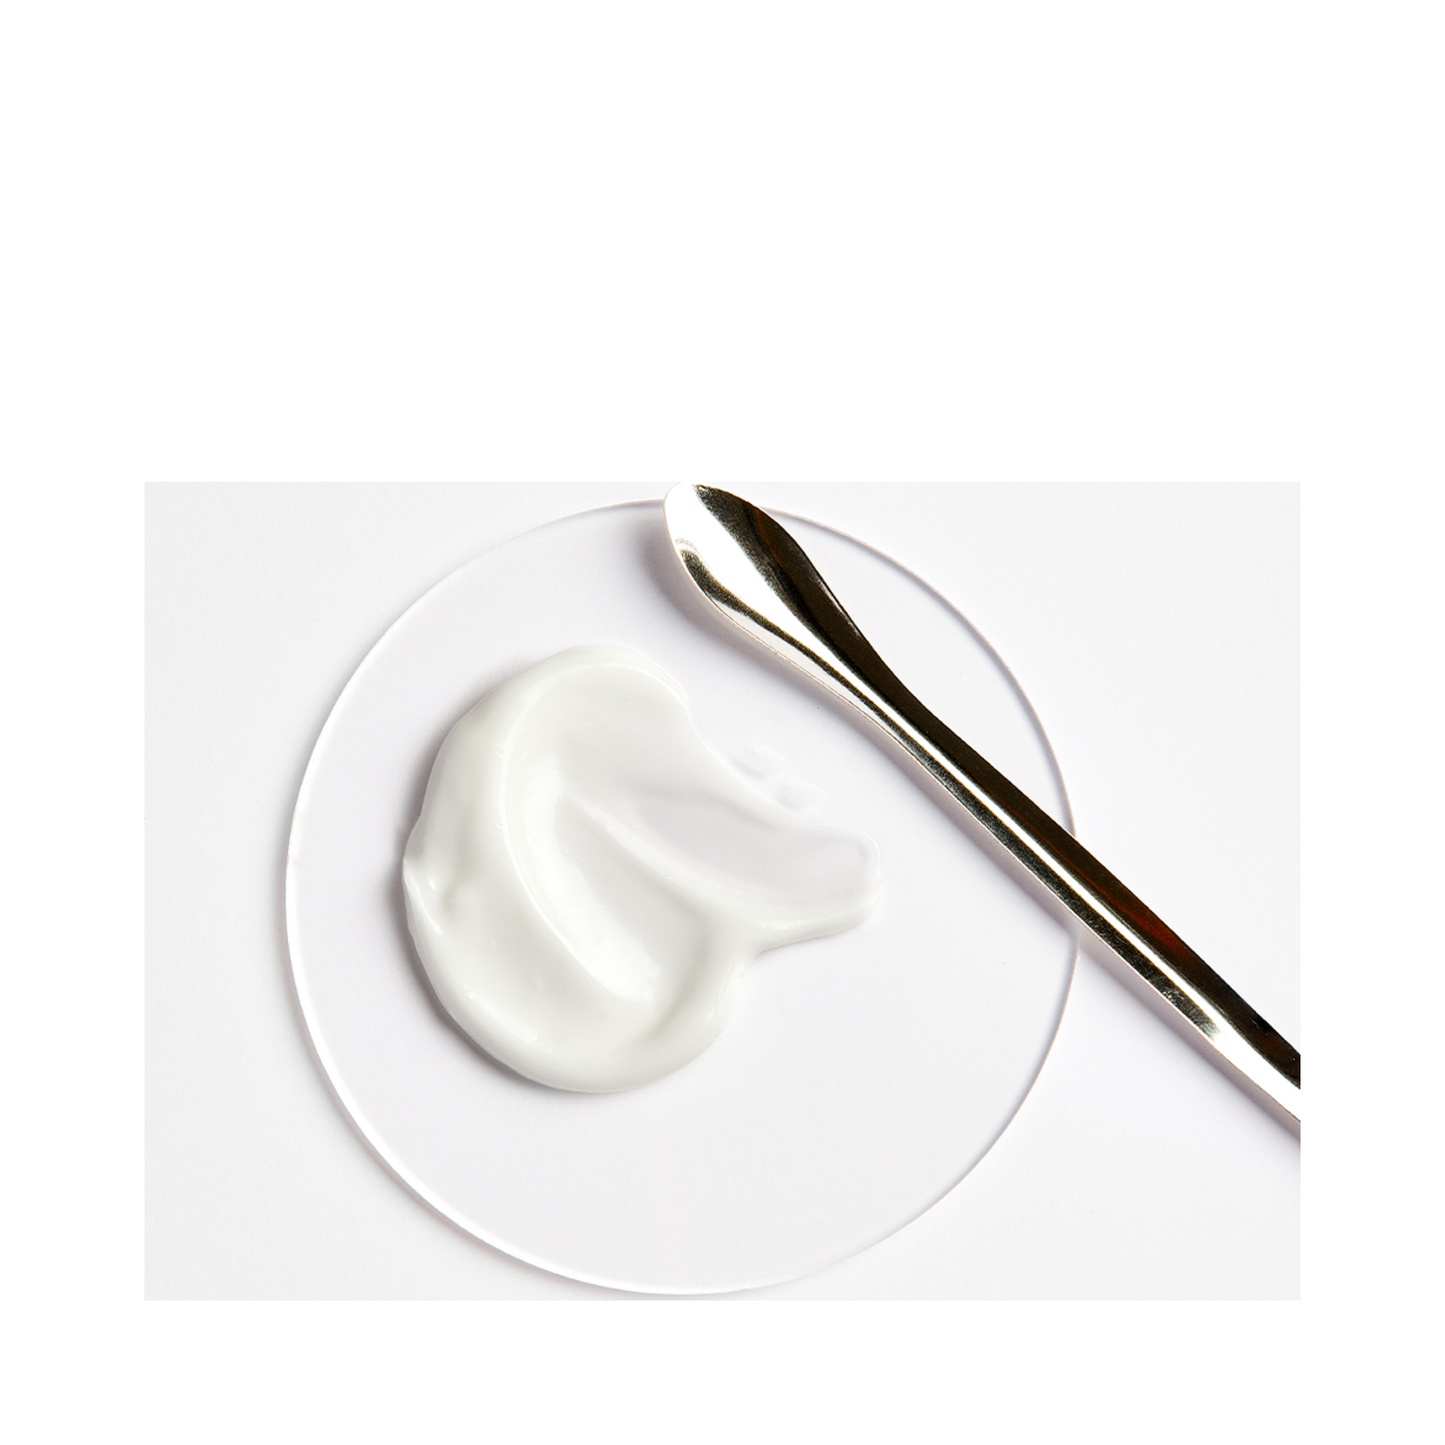 Avene Hyaluron Activ B3 Renewal Firming Cream Refill